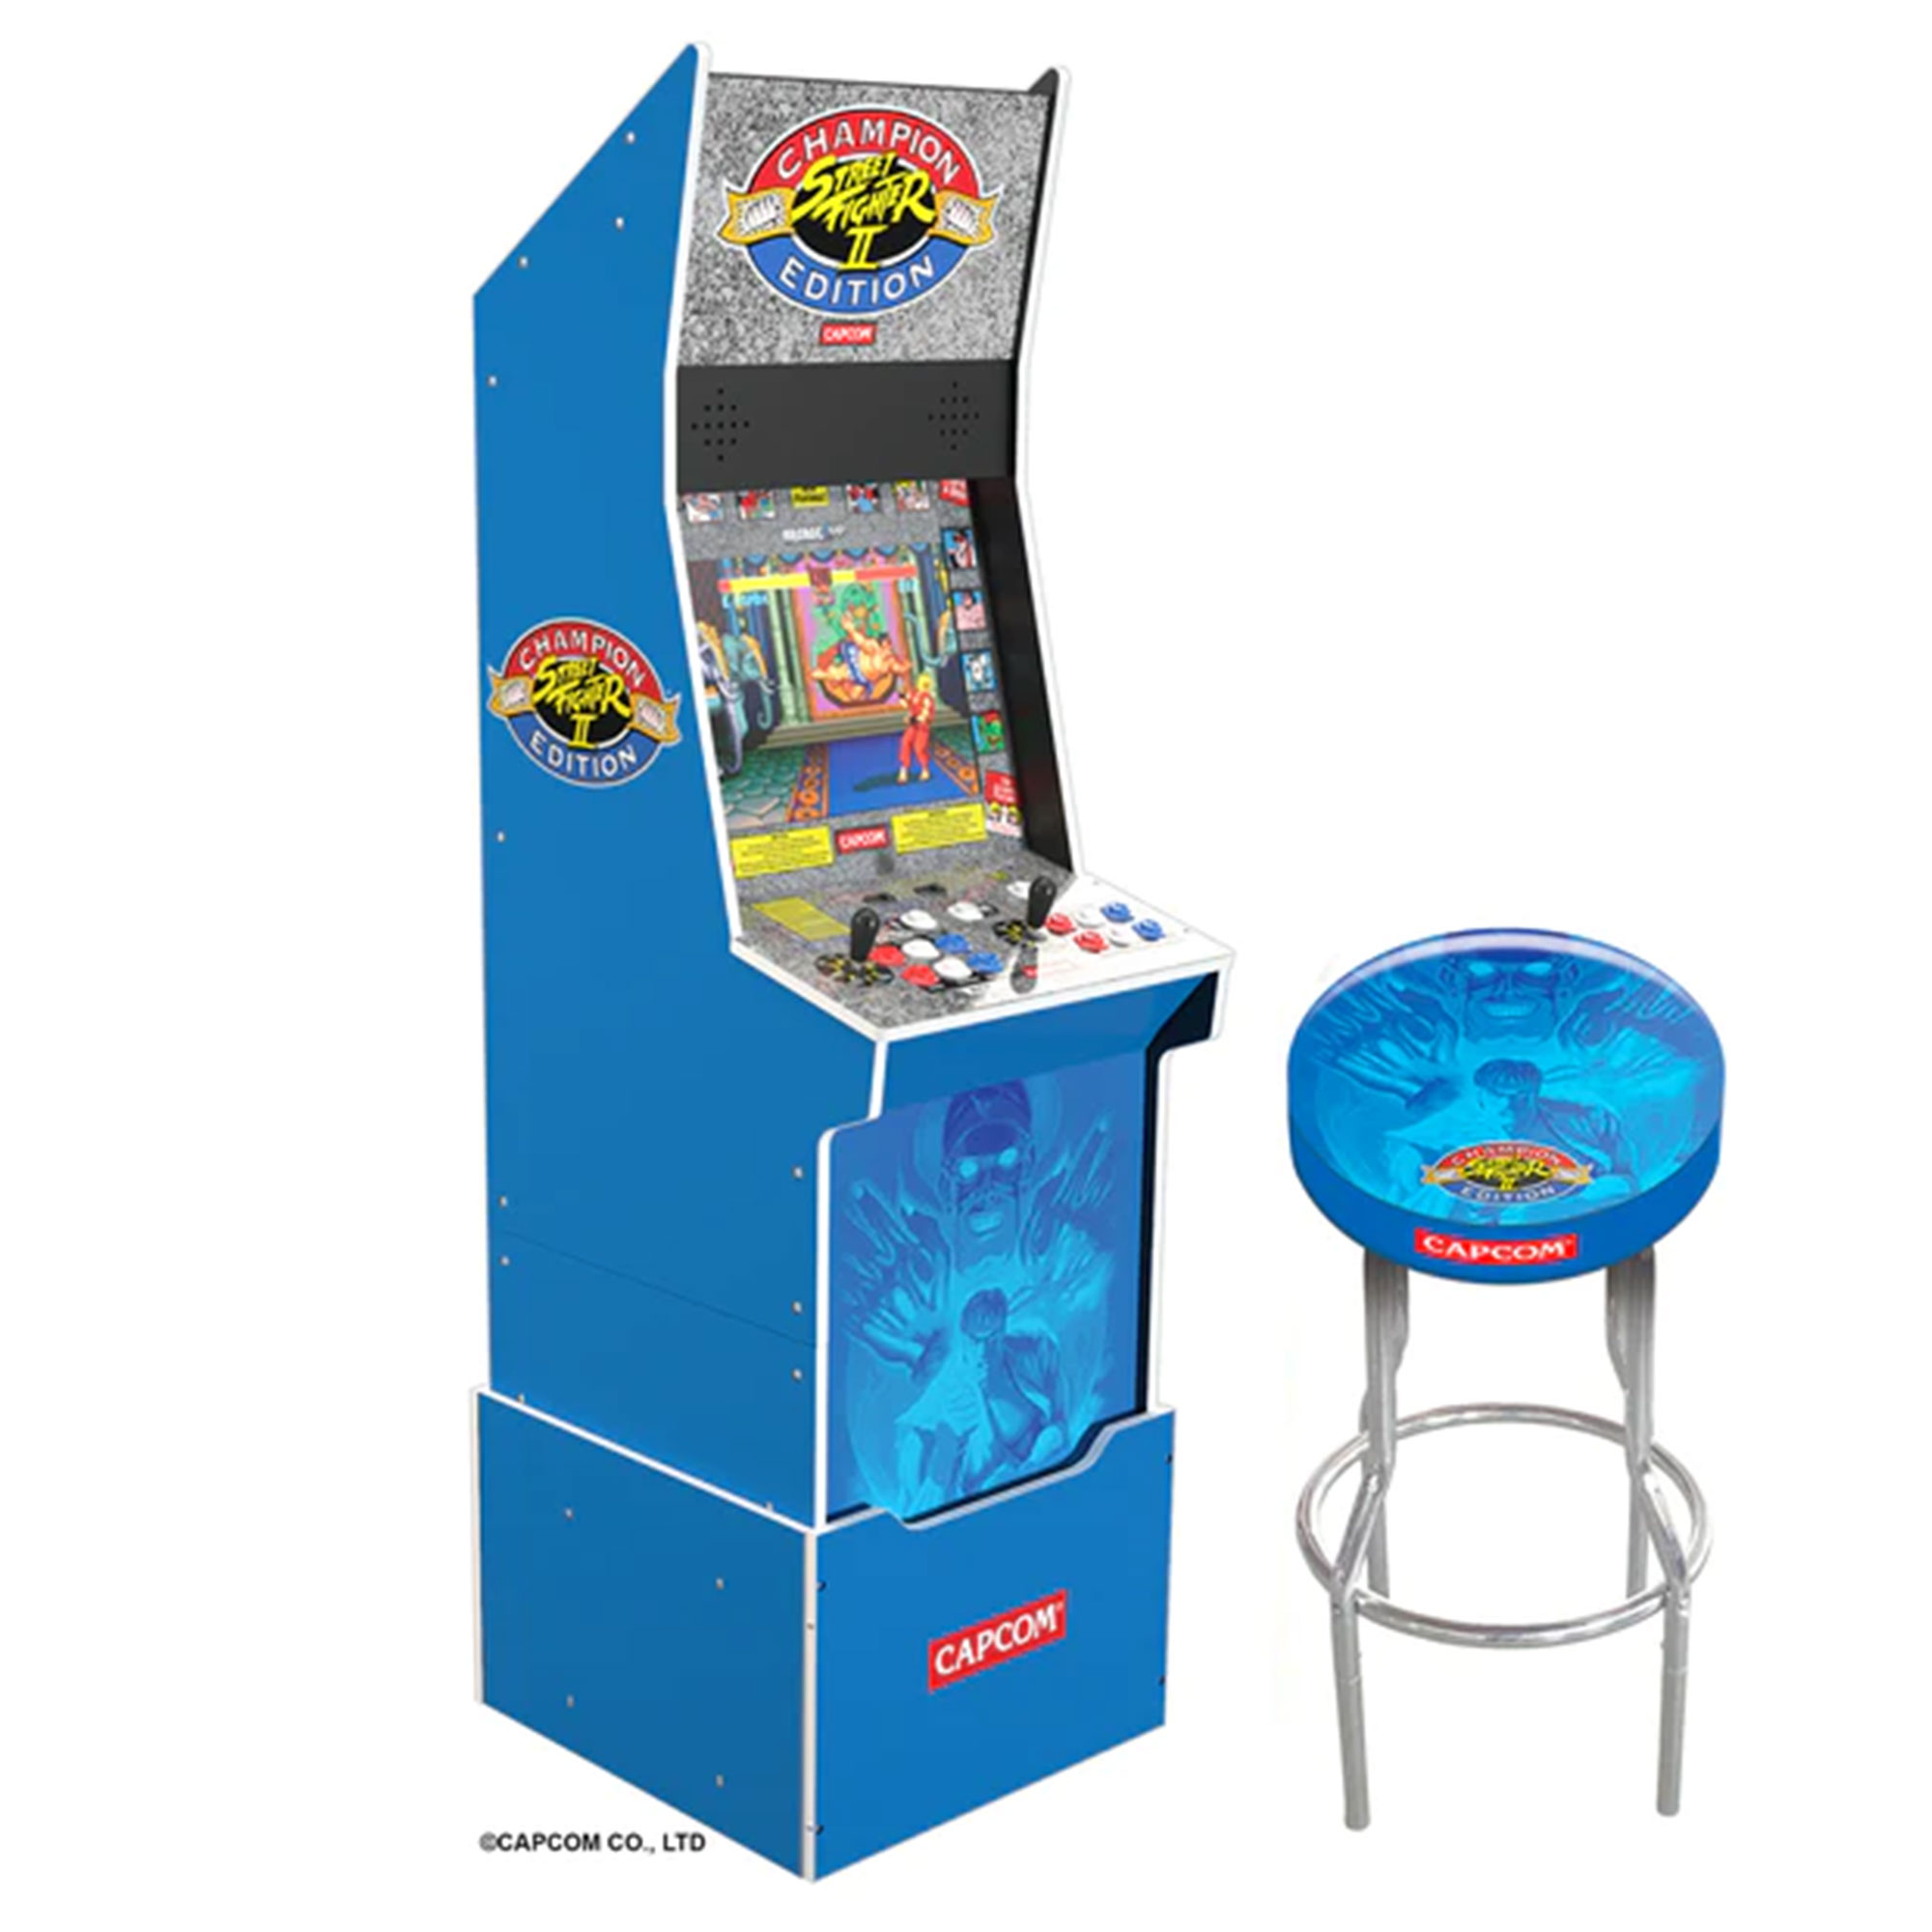 Arcade1Up Street Fighter II Champion Edition Big Blue Arcade Machine with Stool - image 1 of 8